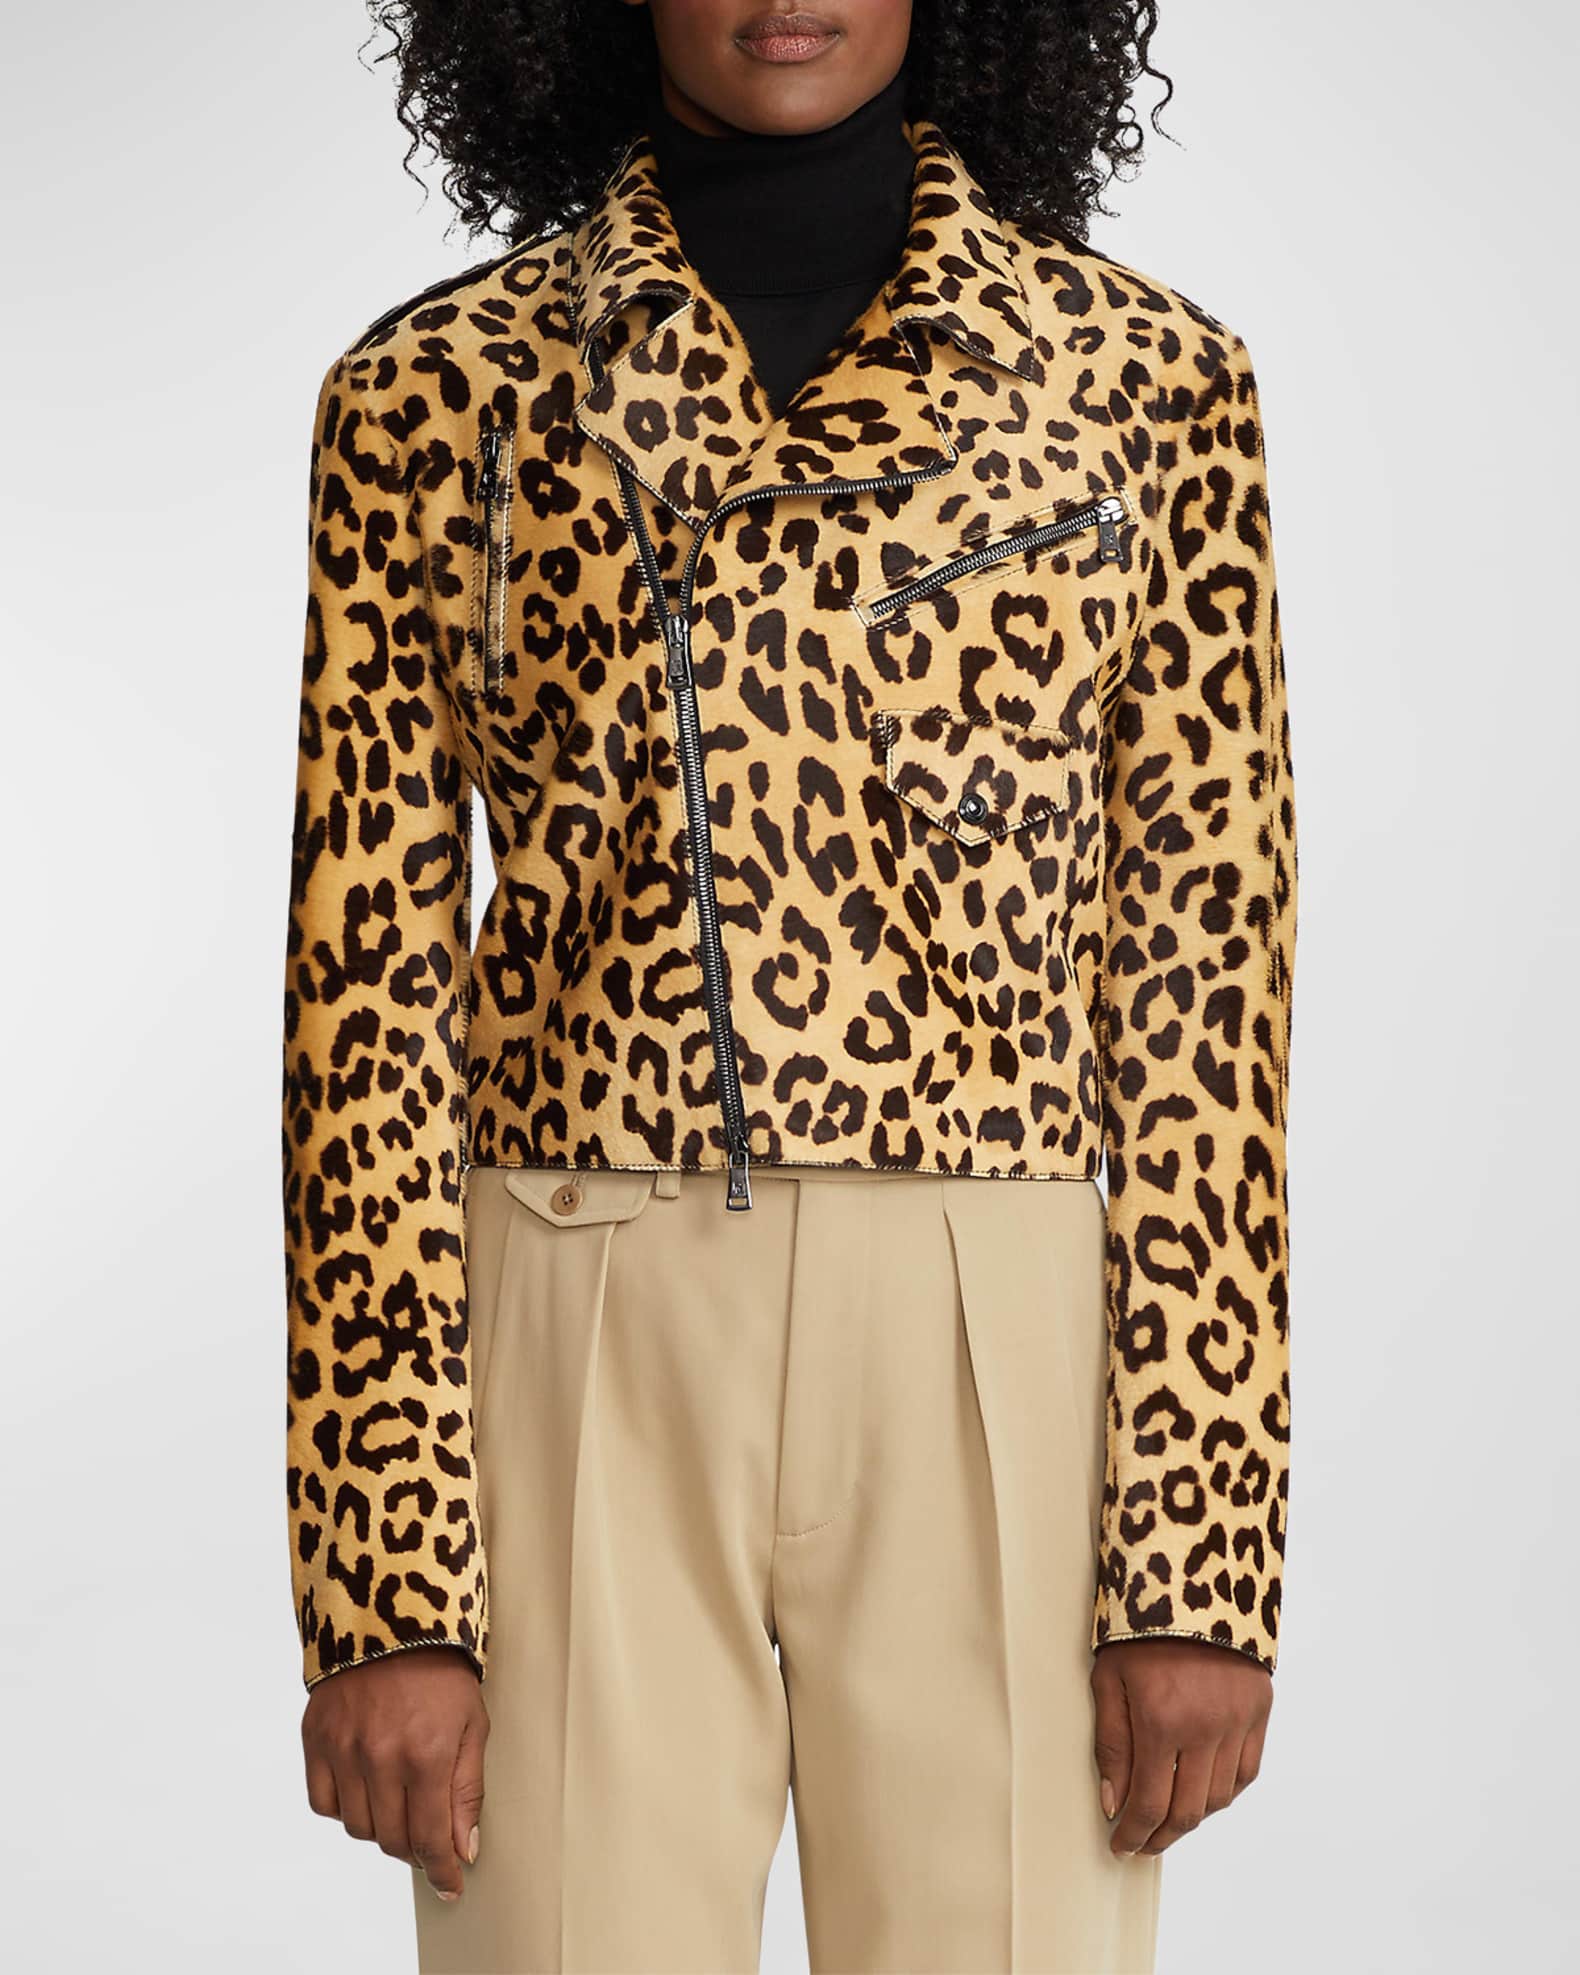 Biker Jacket Leopard Animal Print Leather 